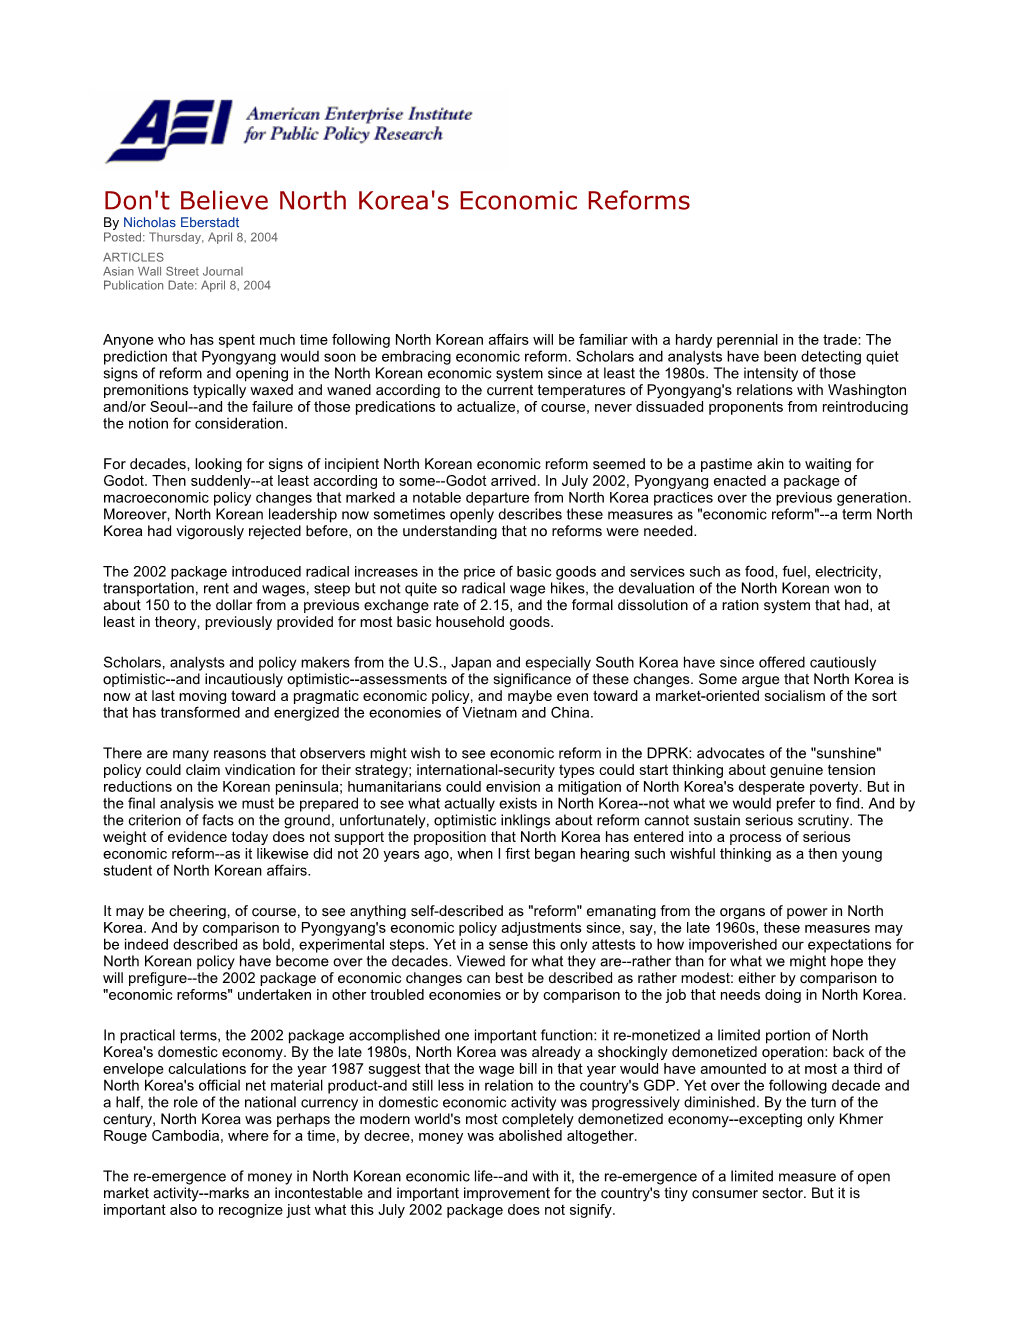 Don't Believe North Korea's Economic Reforms by Nicholas Eberstadt Posted: Thursday, April 8, 2004 ARTICLES Asian Wall Street Journal Publication Date: April 8, 2004